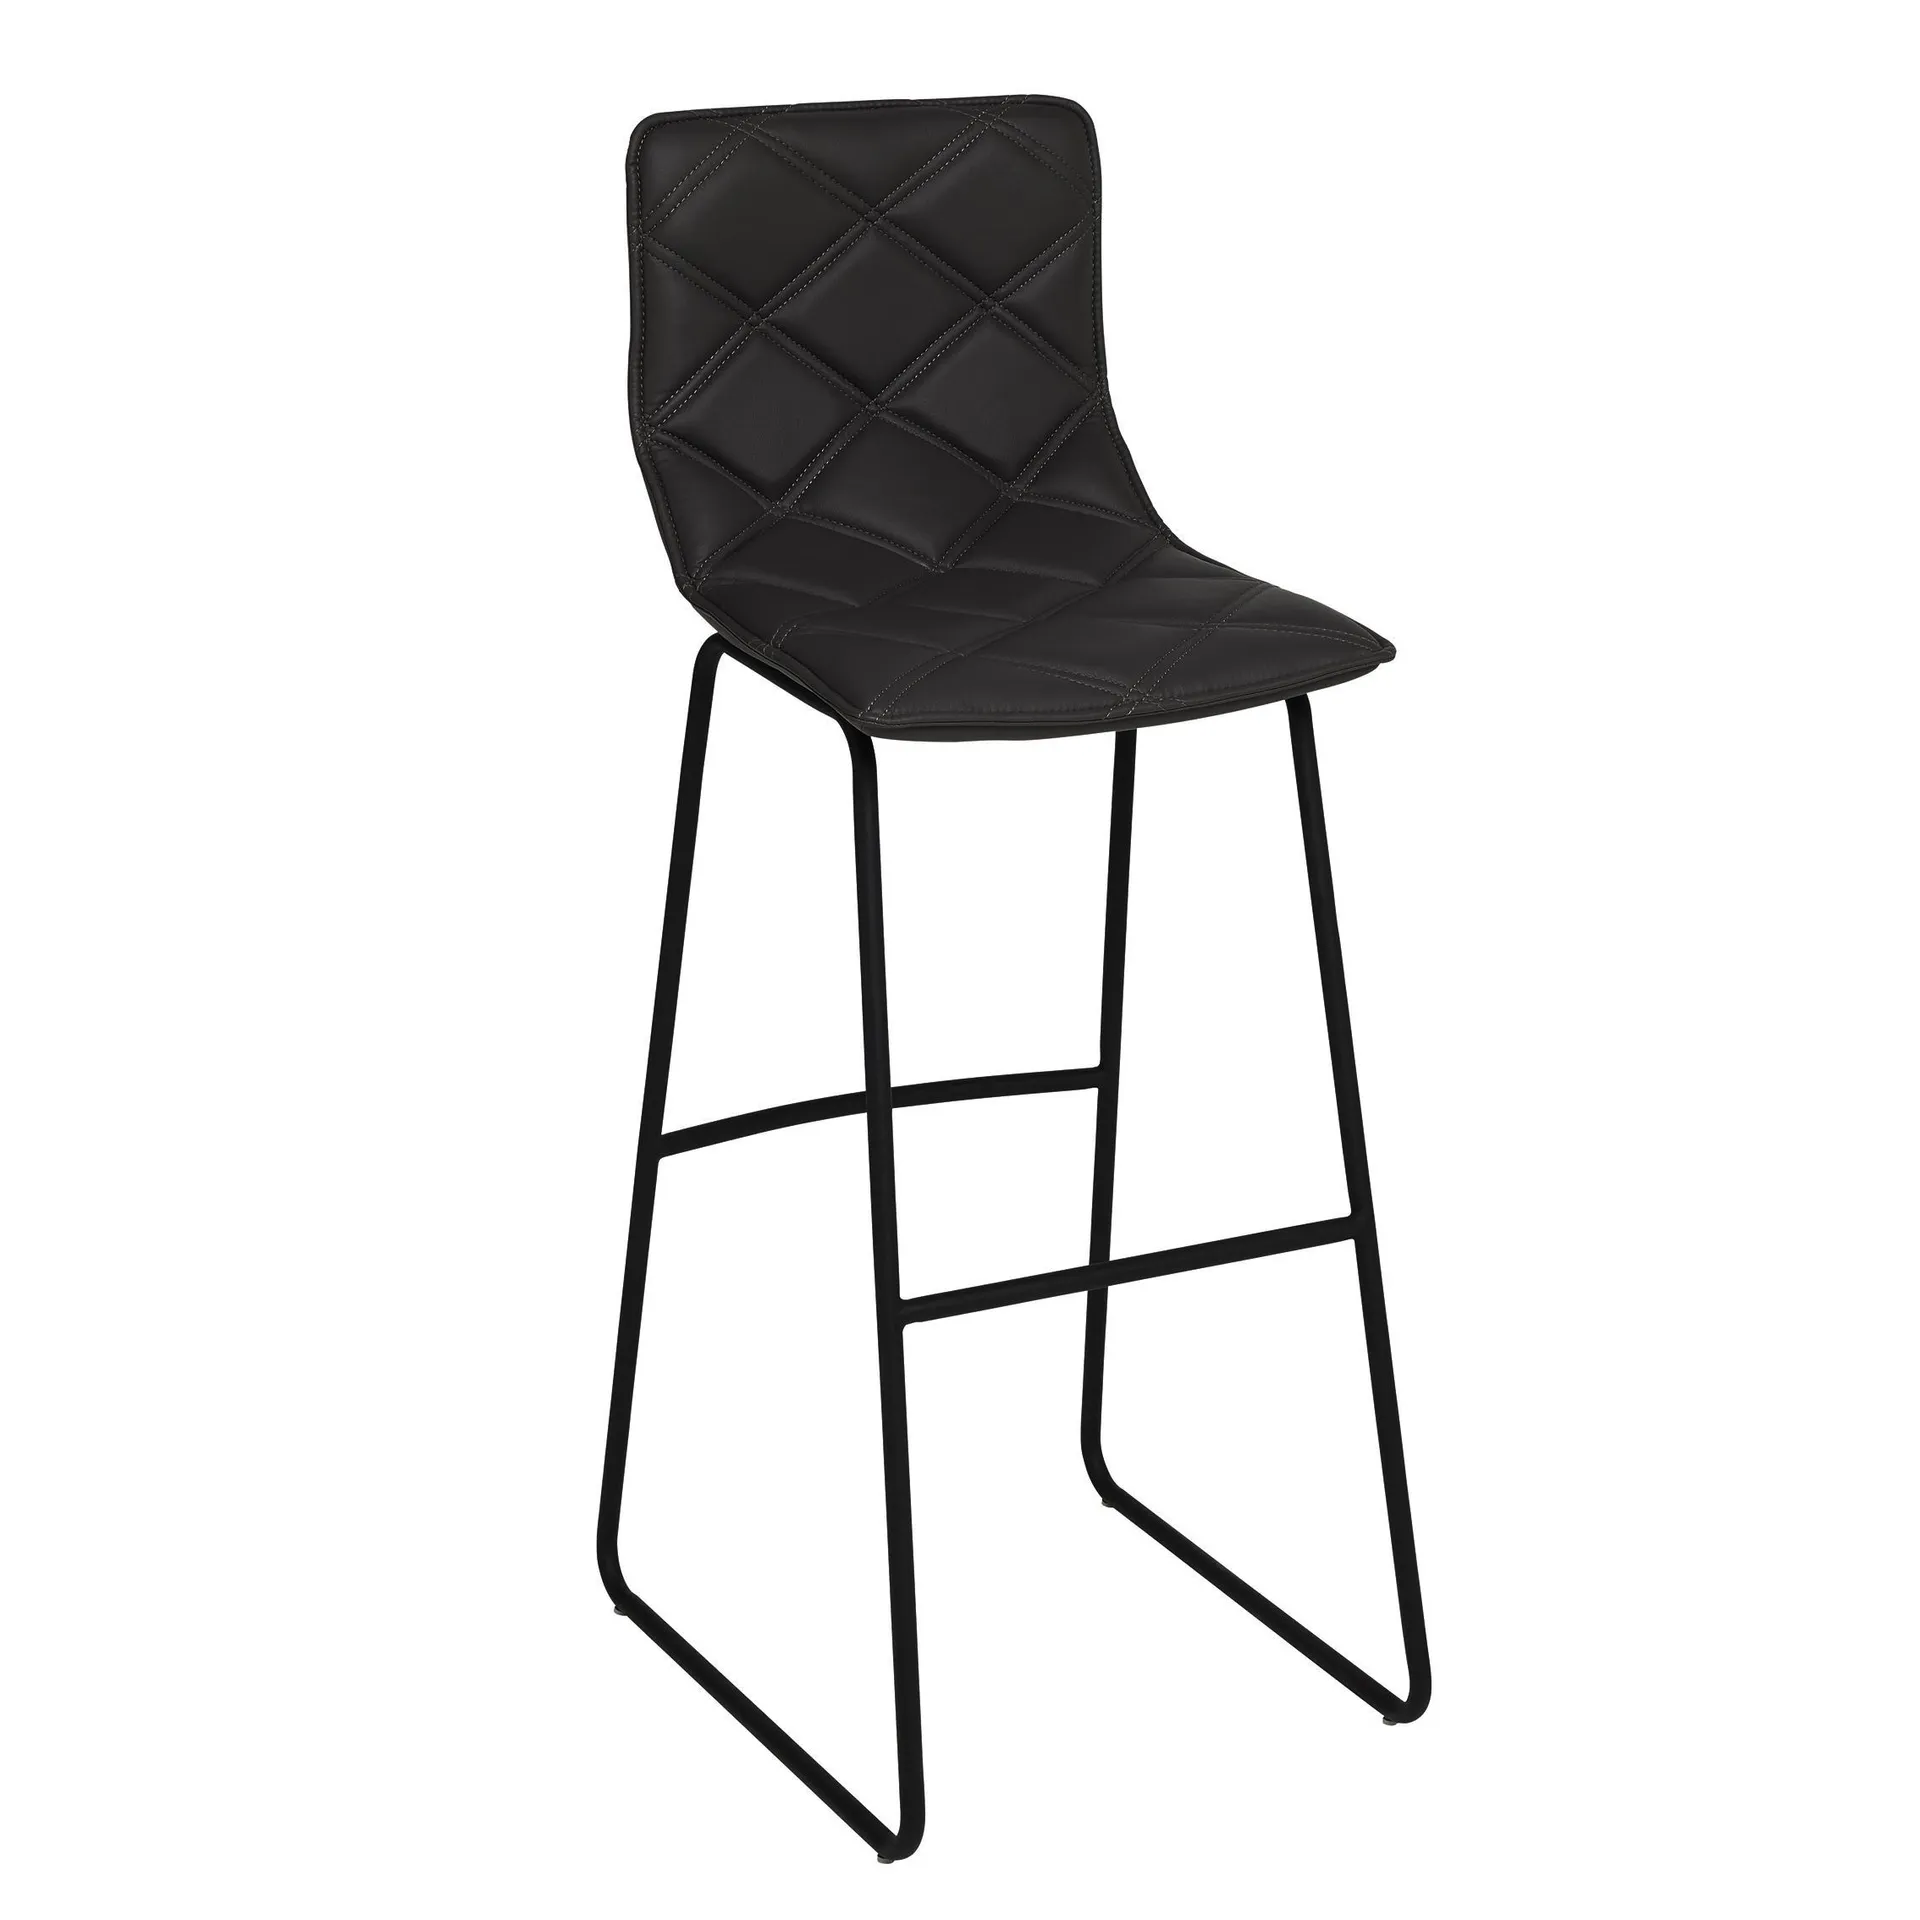 Portela bar stool black